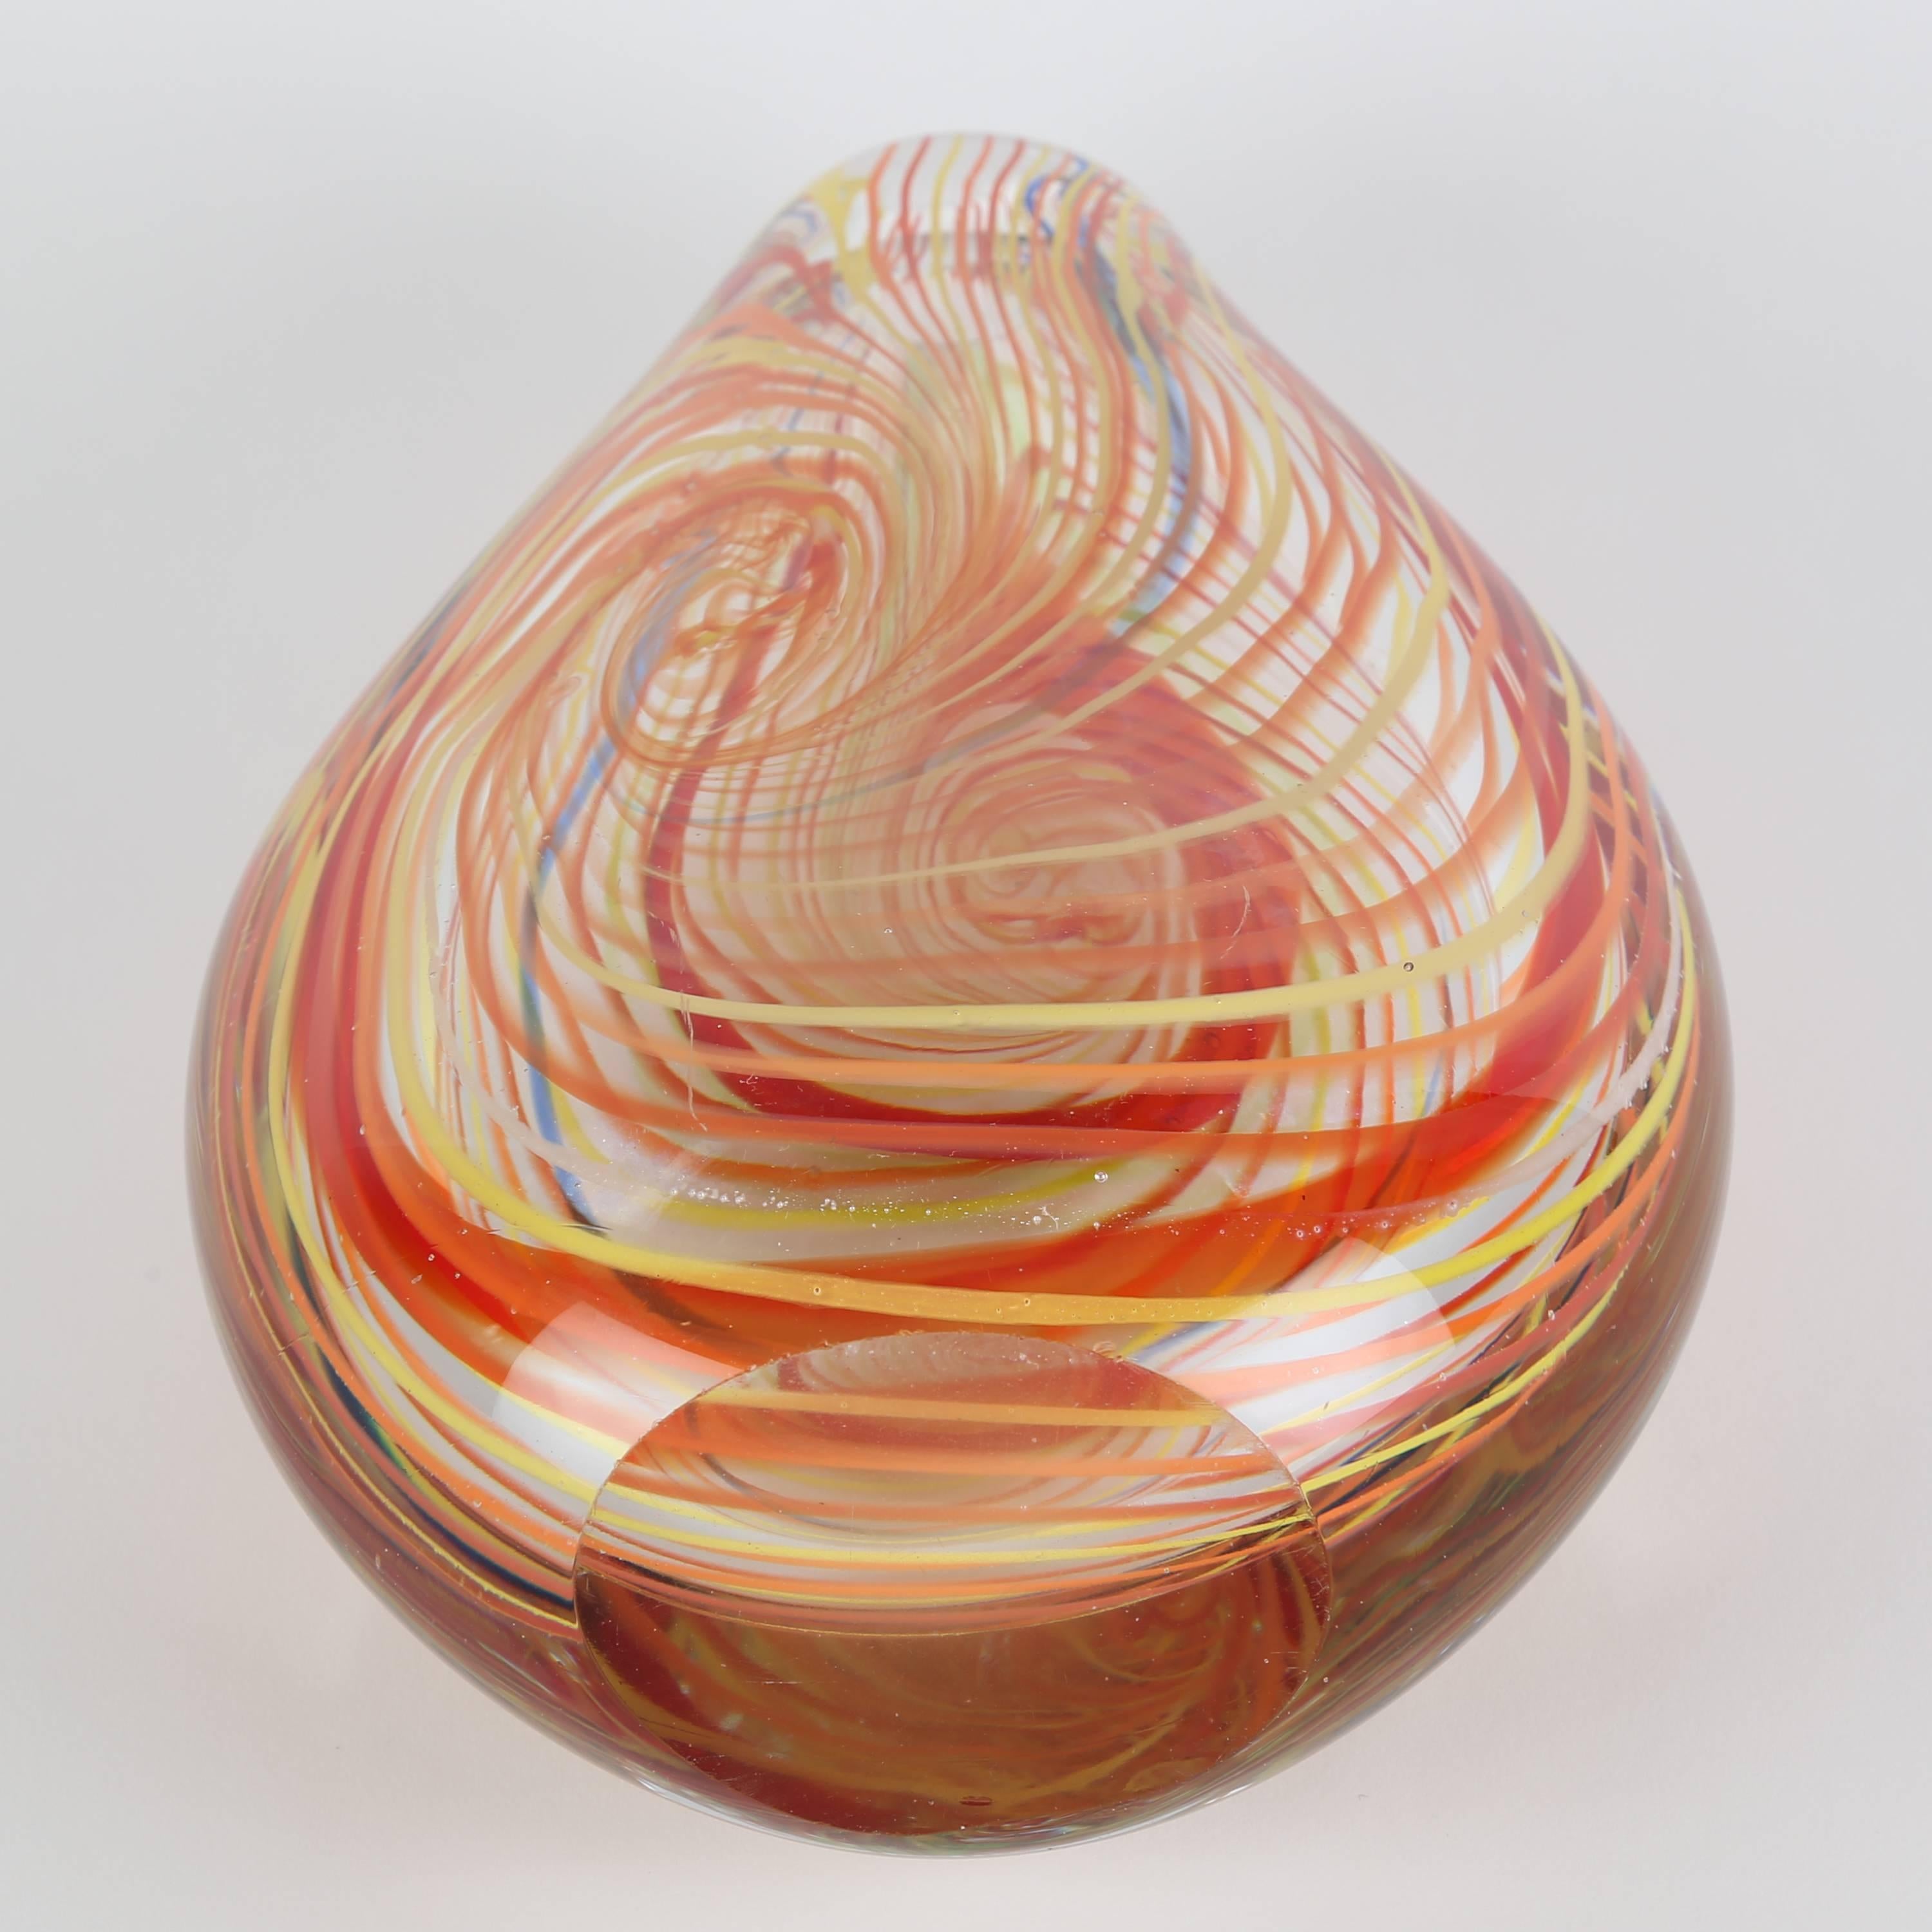 Blown Glass Murano 1960s Art Glass Vase with Swirls of Orange, Red, Yellow and Blue